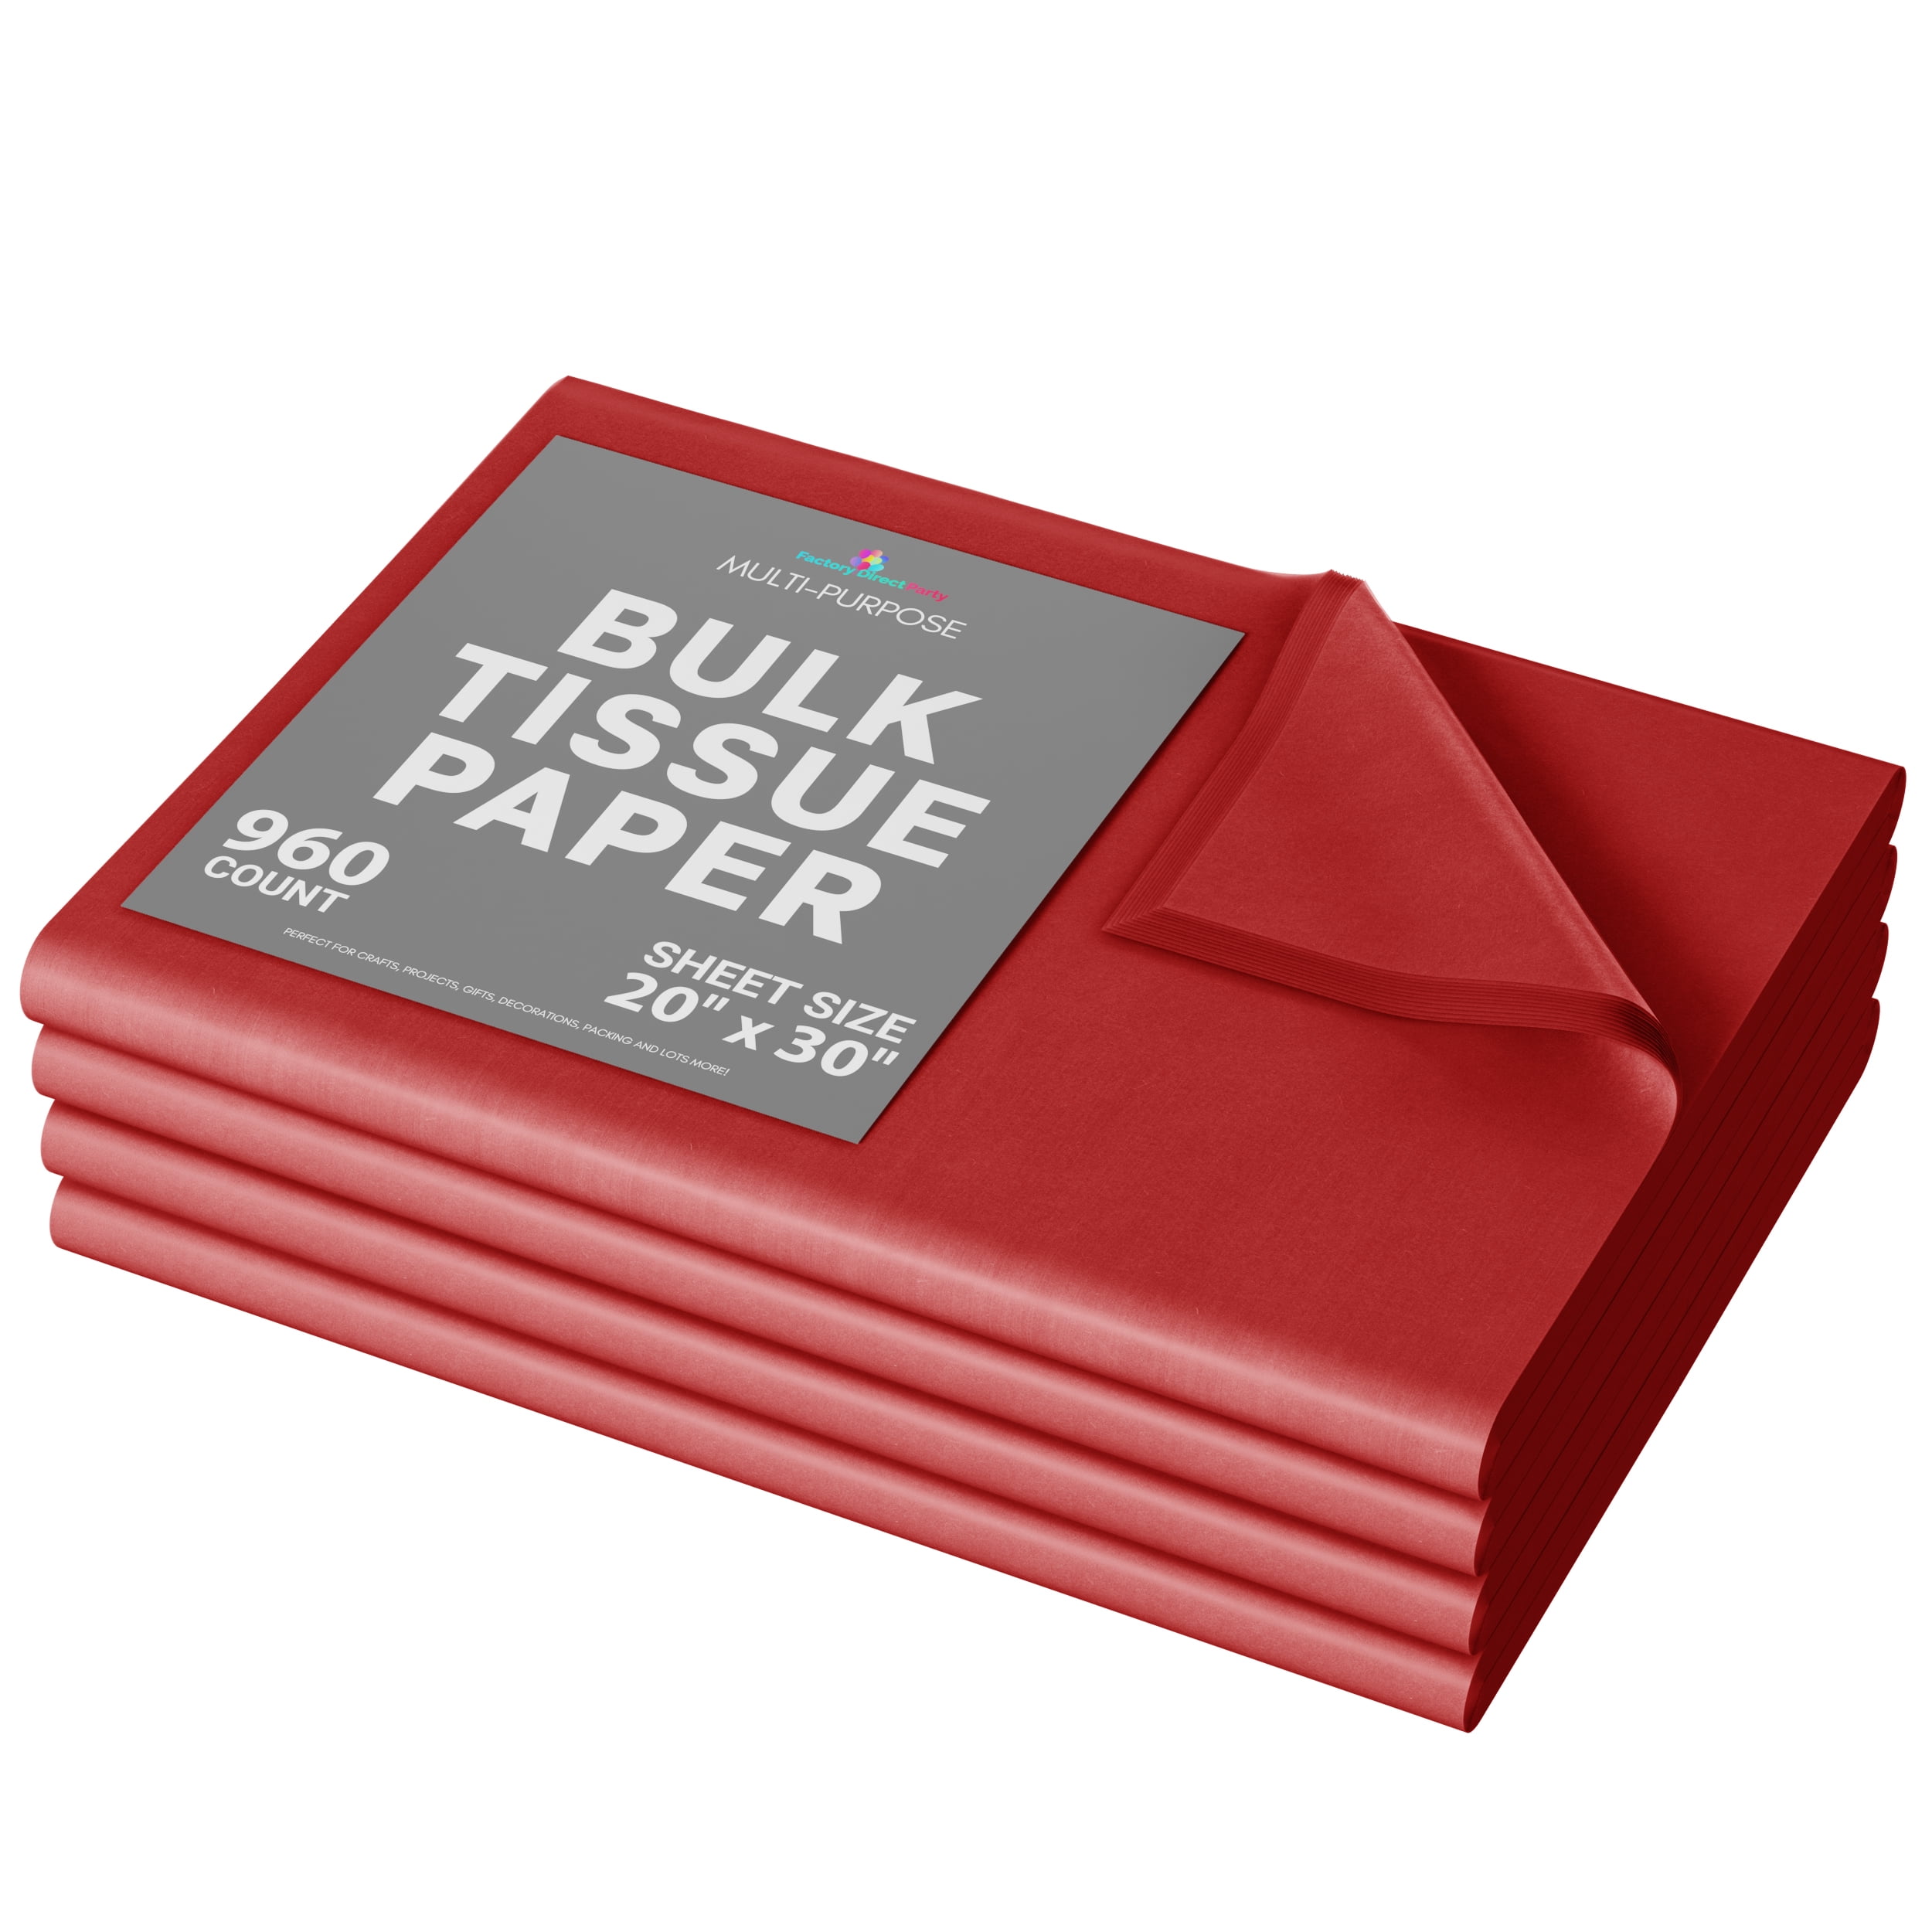 NEW TISSUE PAPER BULK REAM 440x660 - 500 SHEETS - ACID FREE gift